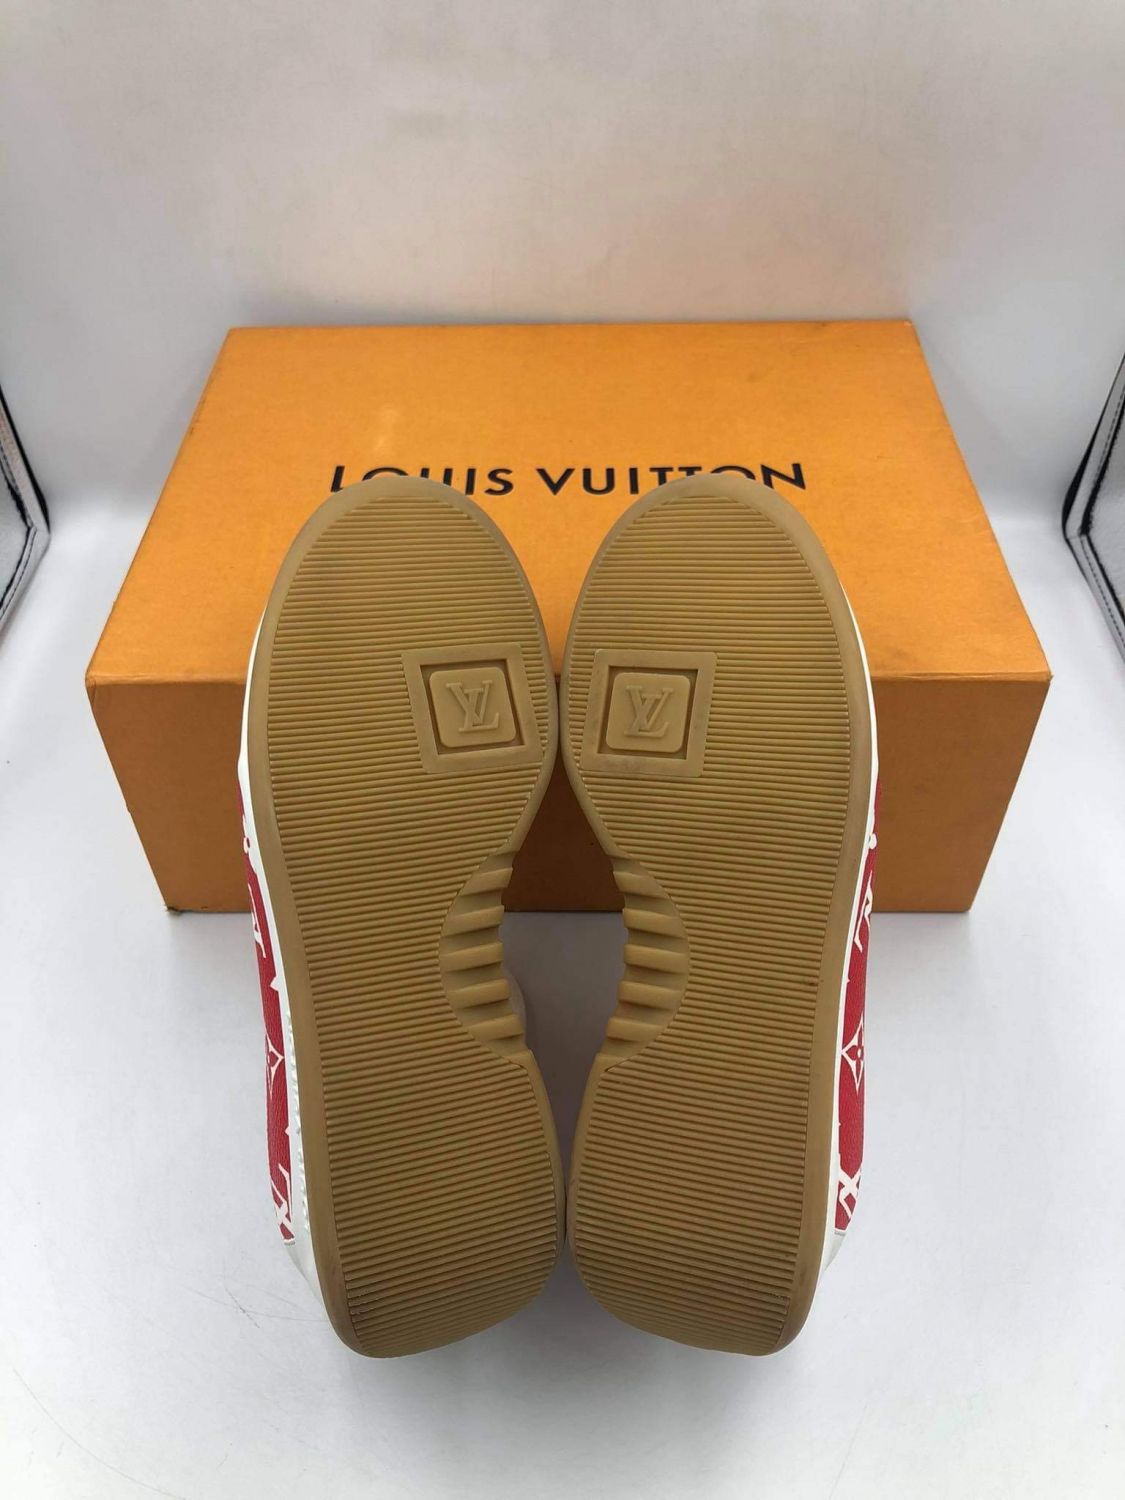 Supreme X Louis Vuitton 'Monogram Red' - Louis Vuitton - CL 0147